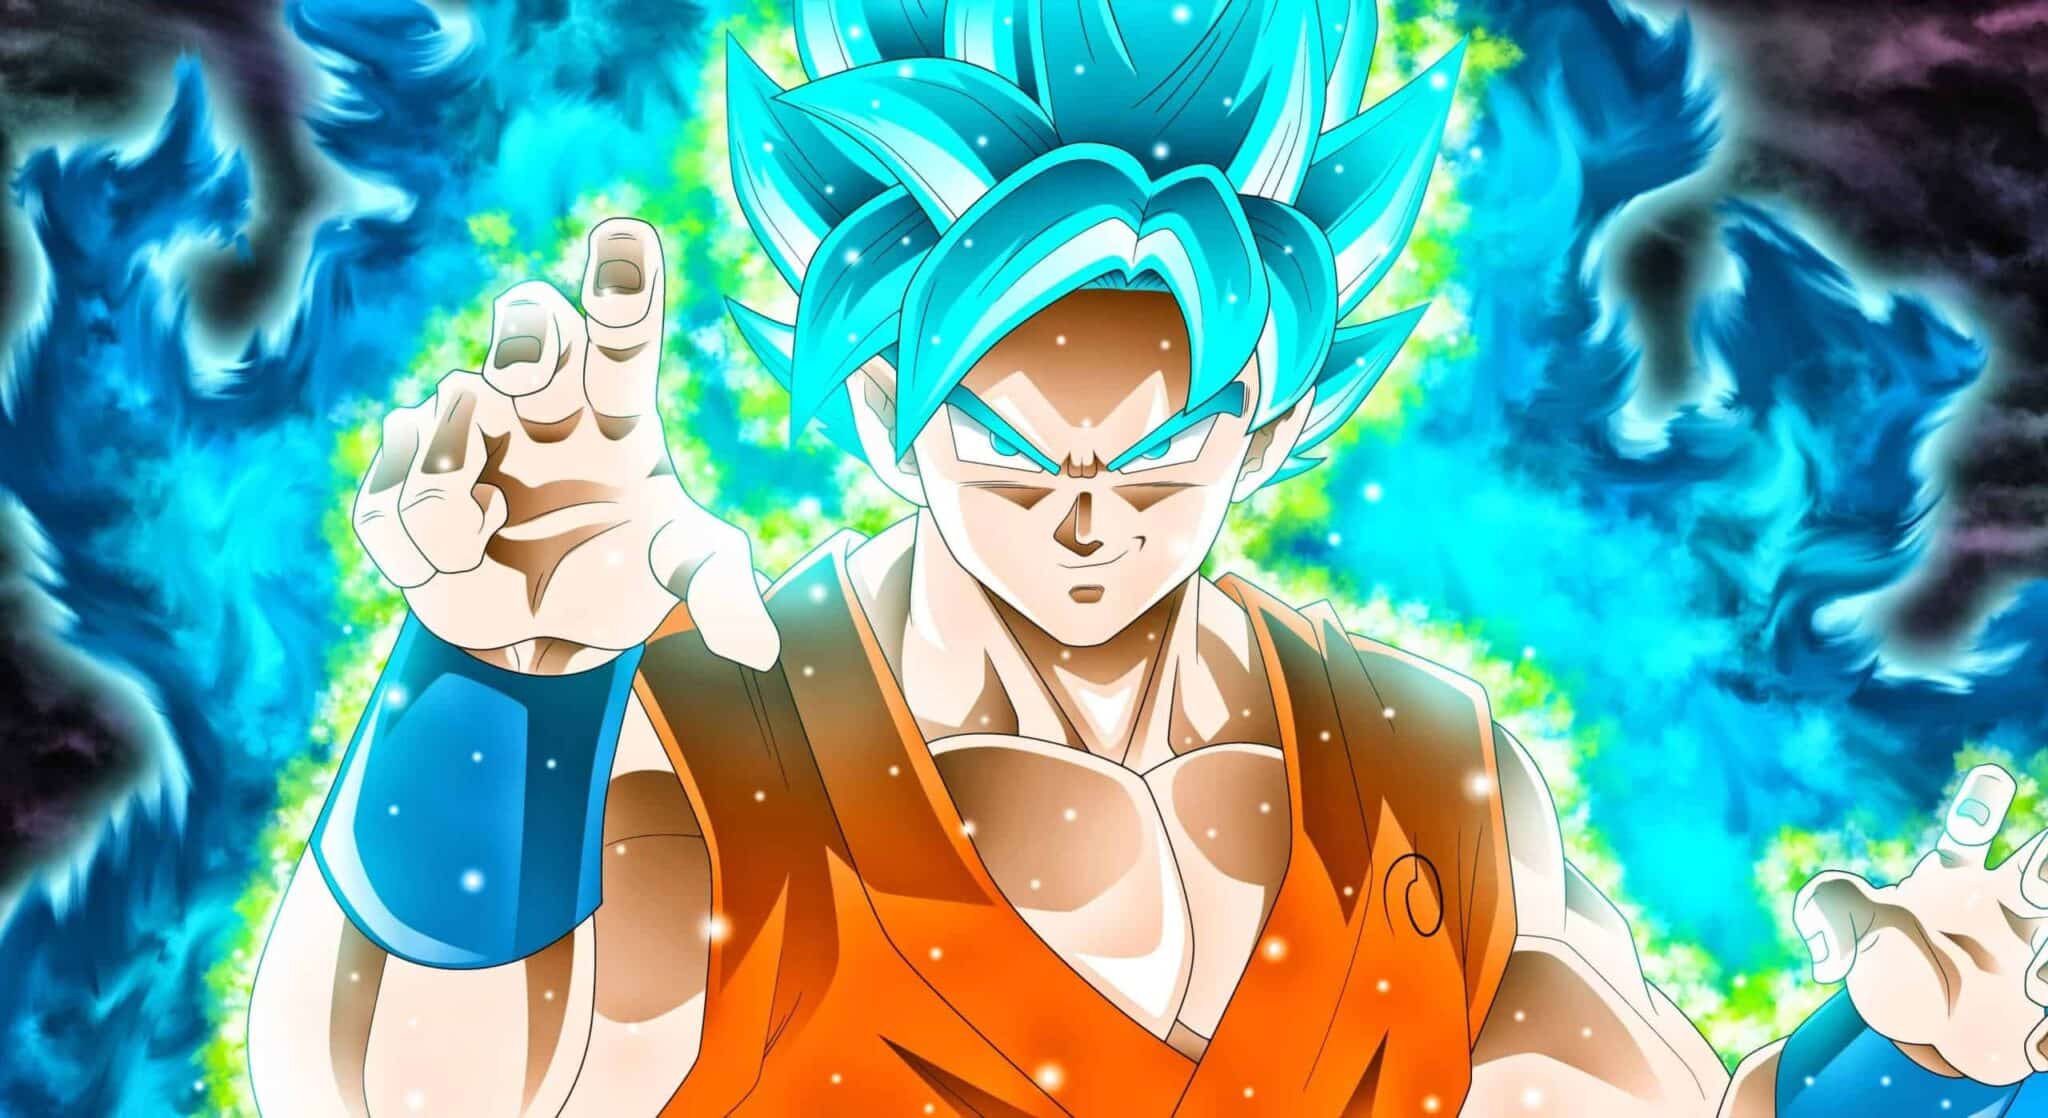 Who Is Stronger Than Goku